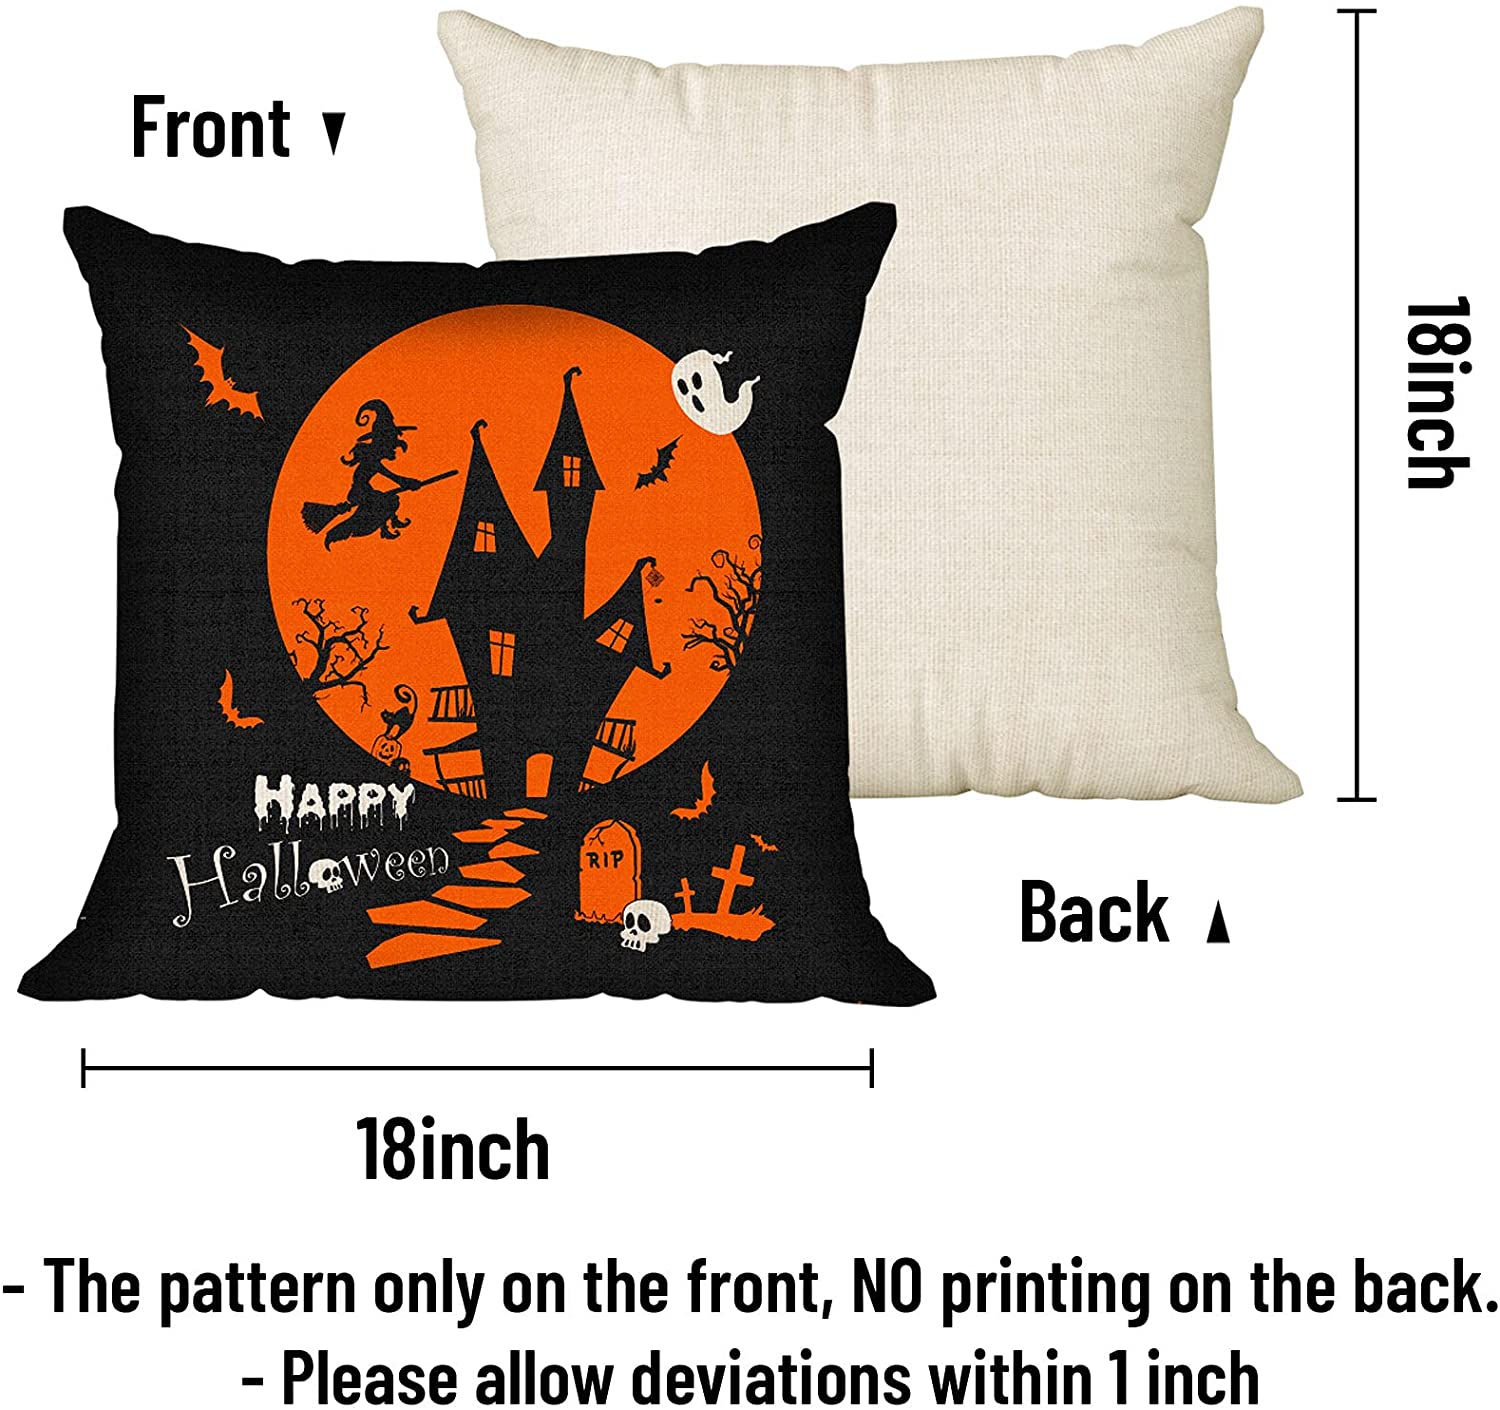 Set of 4 Happy Halloween Throw Pillow Covers 18 x 18 with 4 Bonus Coasters (Check, Pumpkin)